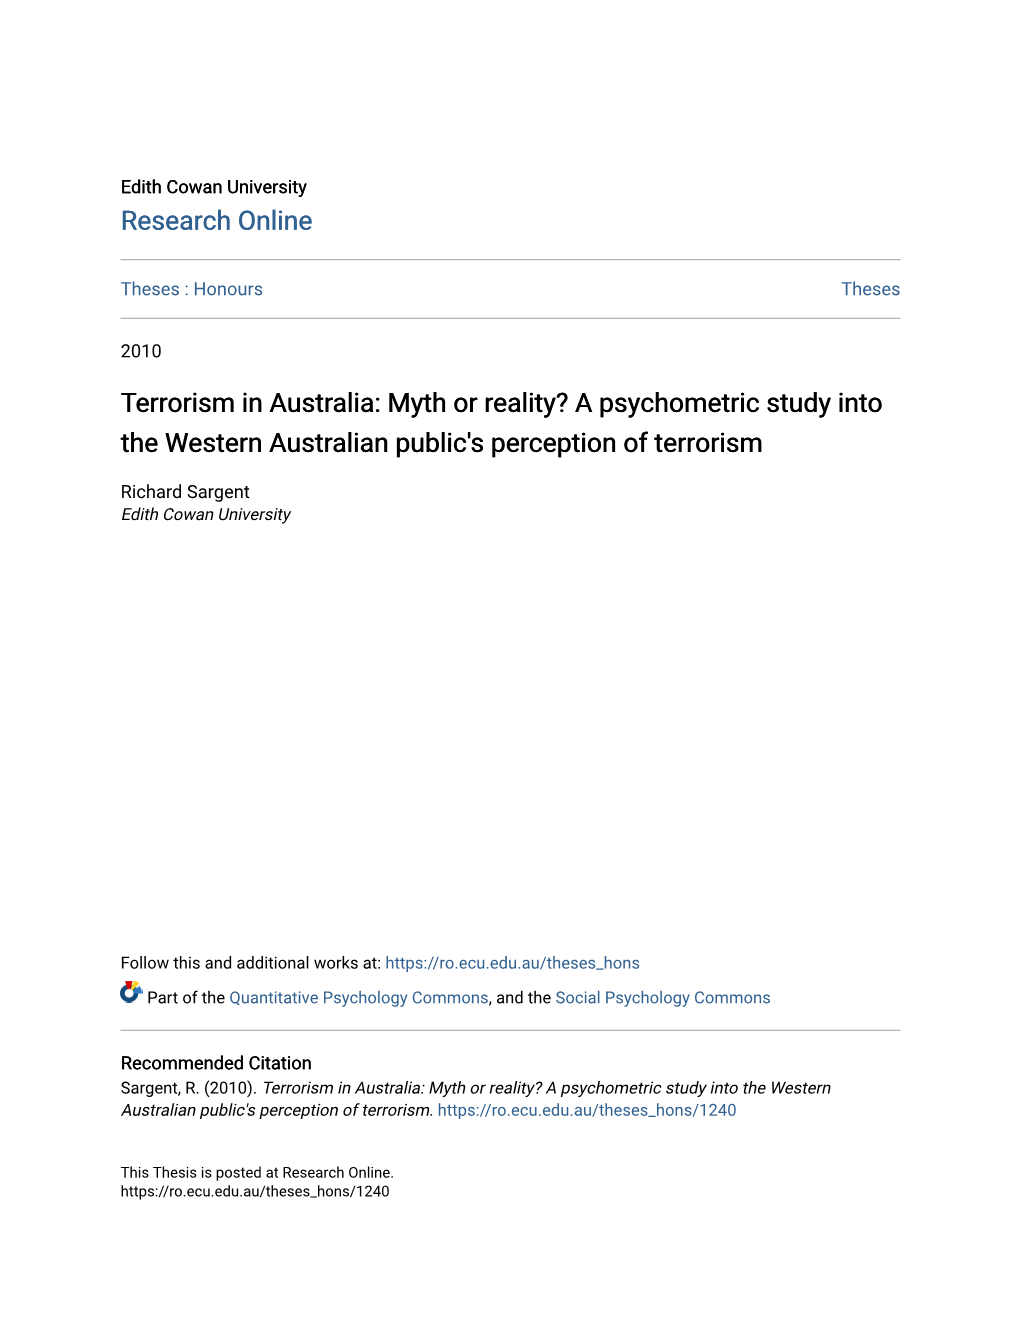 Terrorism in Australia: Myth Or Reality? a Psychometric Study Into the Western Australian Public's Perception of Terrorism